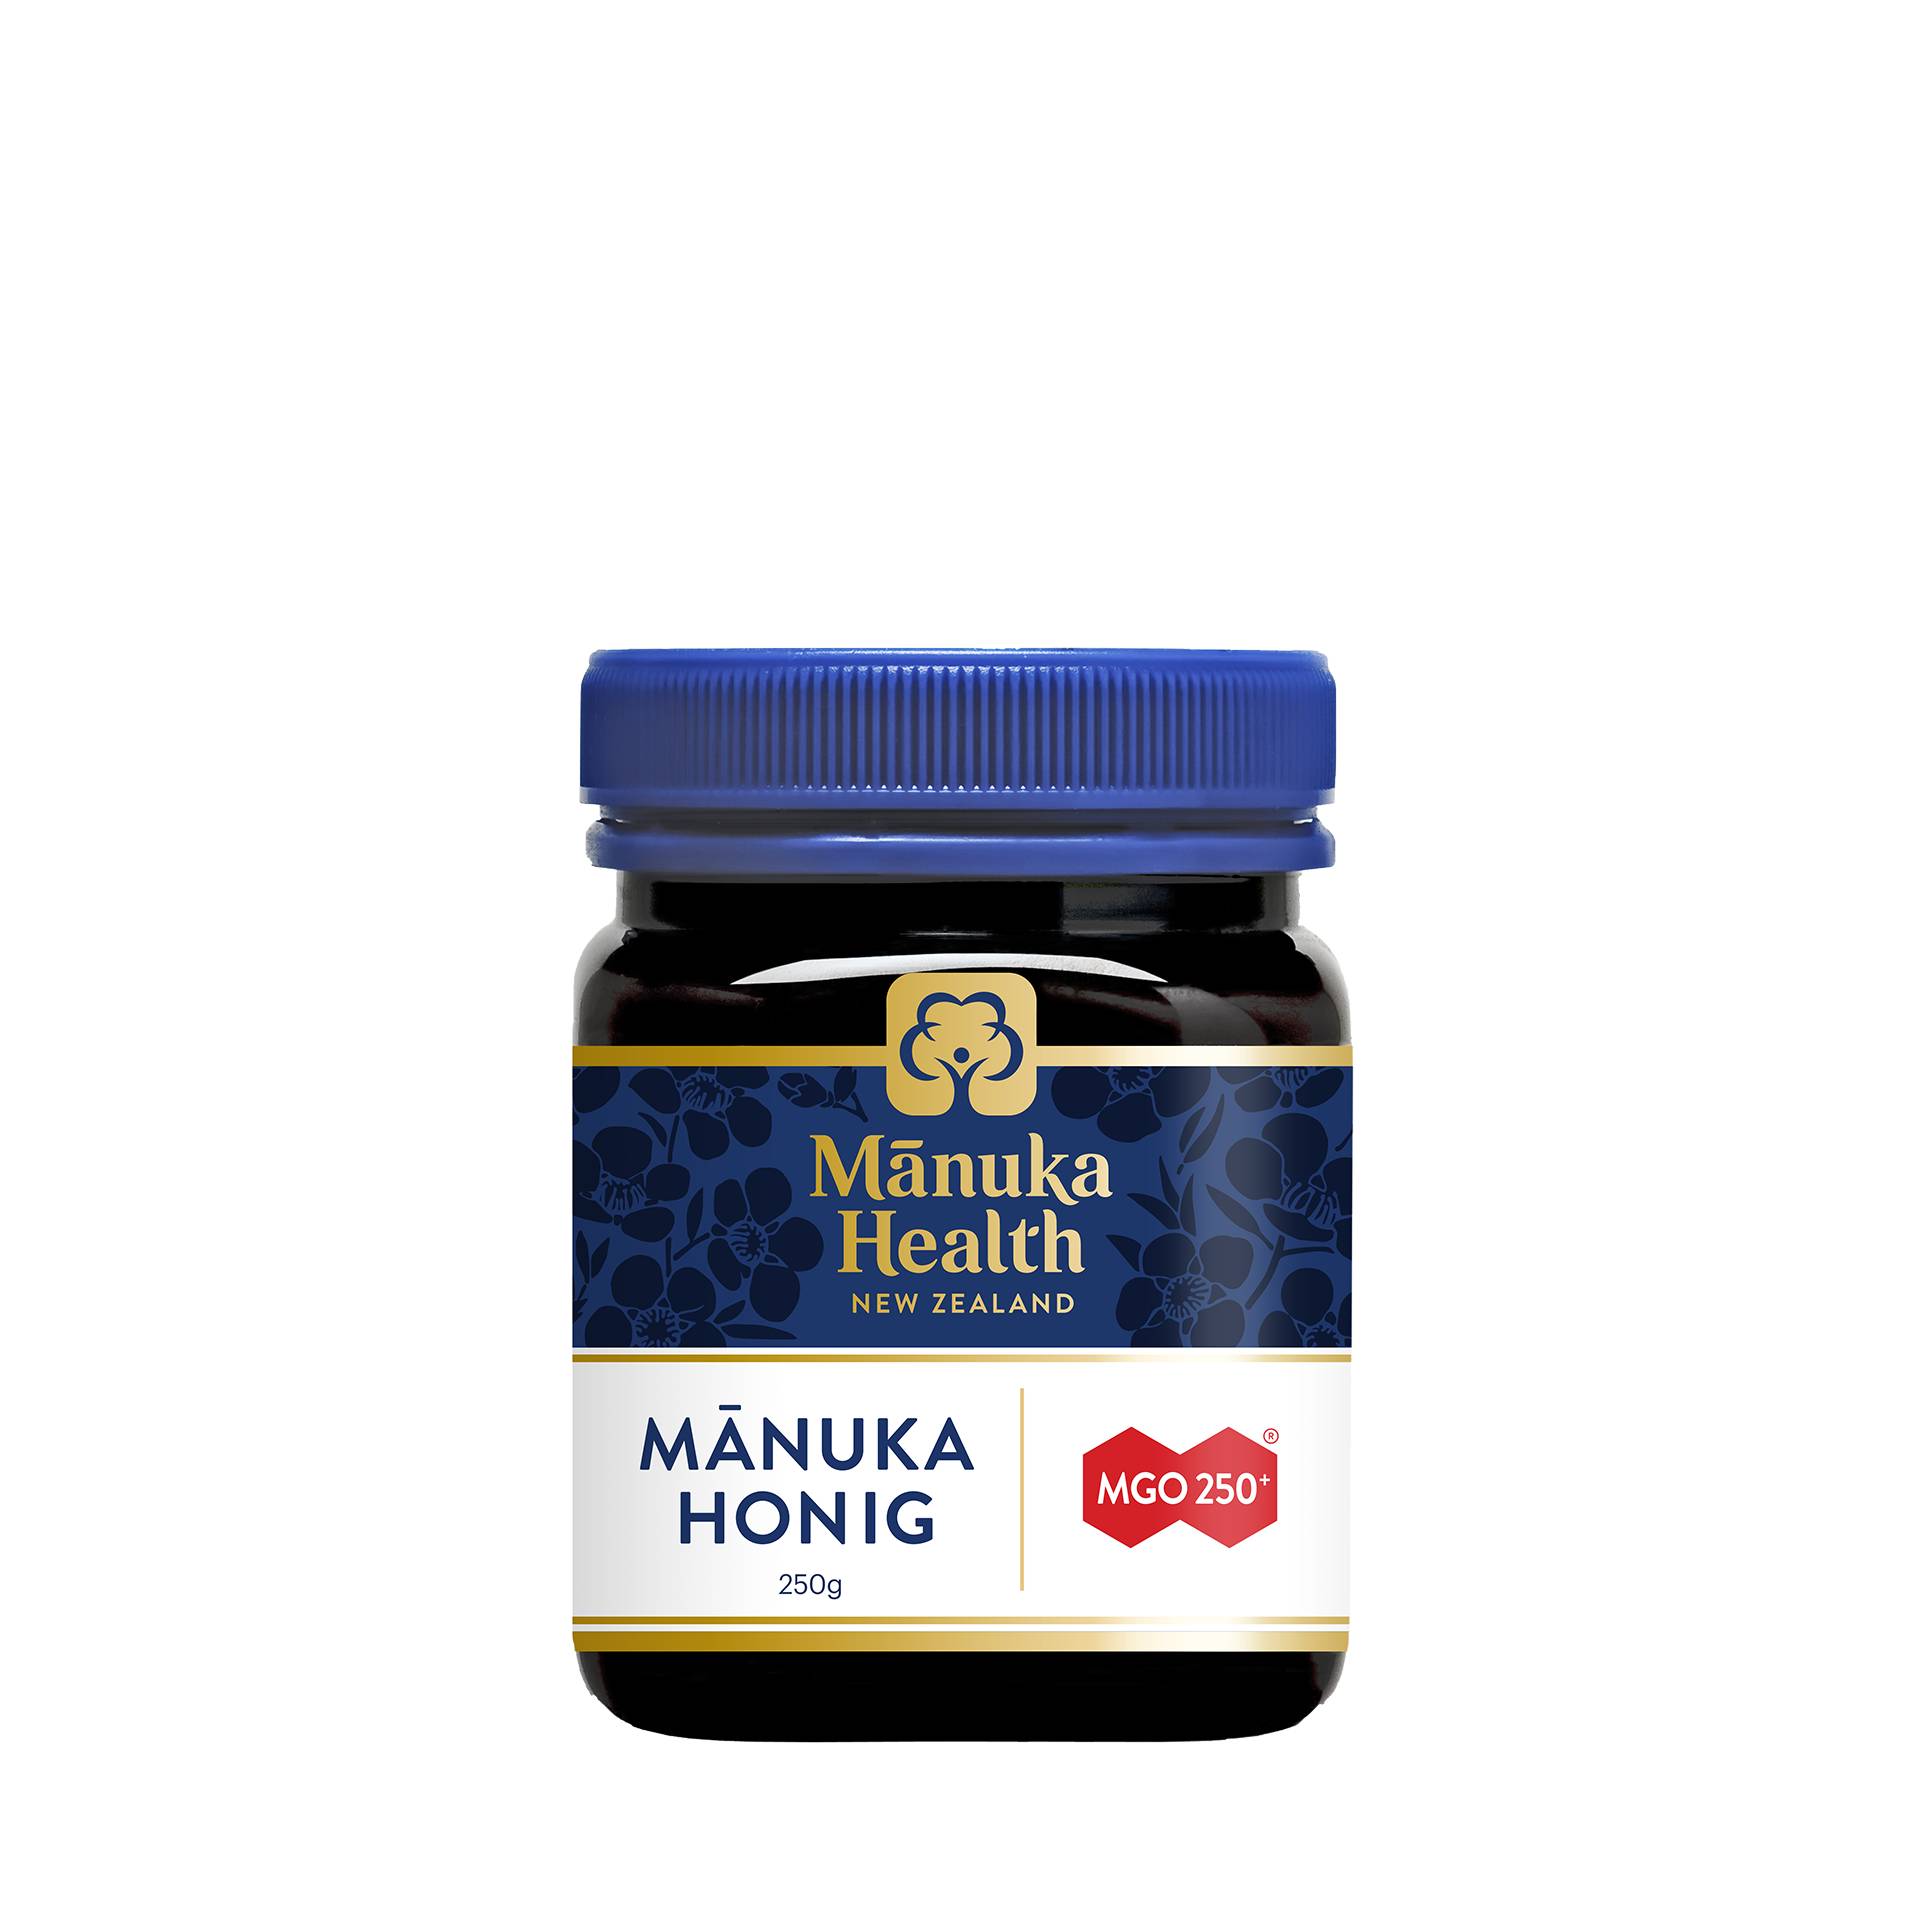 Manuka Honig MGO 250+ 250 g - Enthält mindestens 250 mg Methylglyoxal (MGO) pro Kilogramm - Manuka Health von Manuka Health